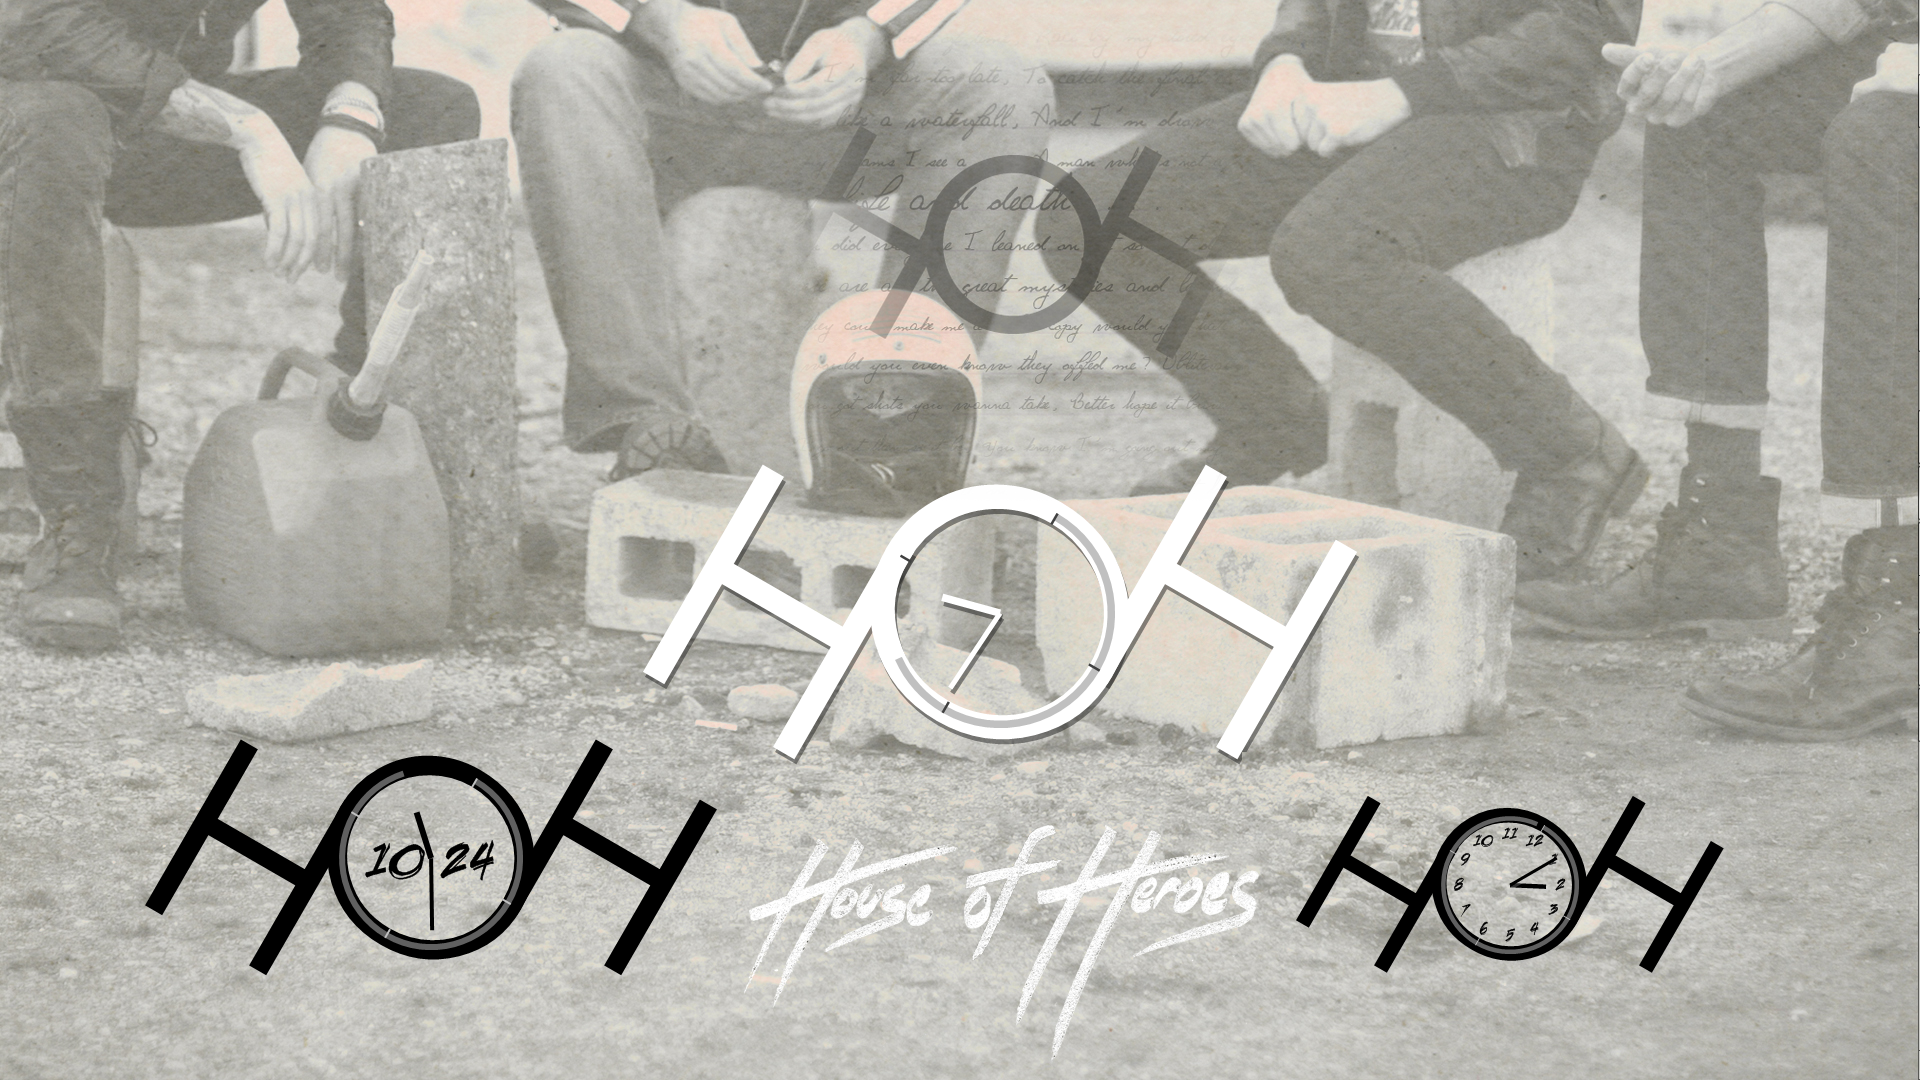 House of Heroes HOH Logo Clock [1.0]